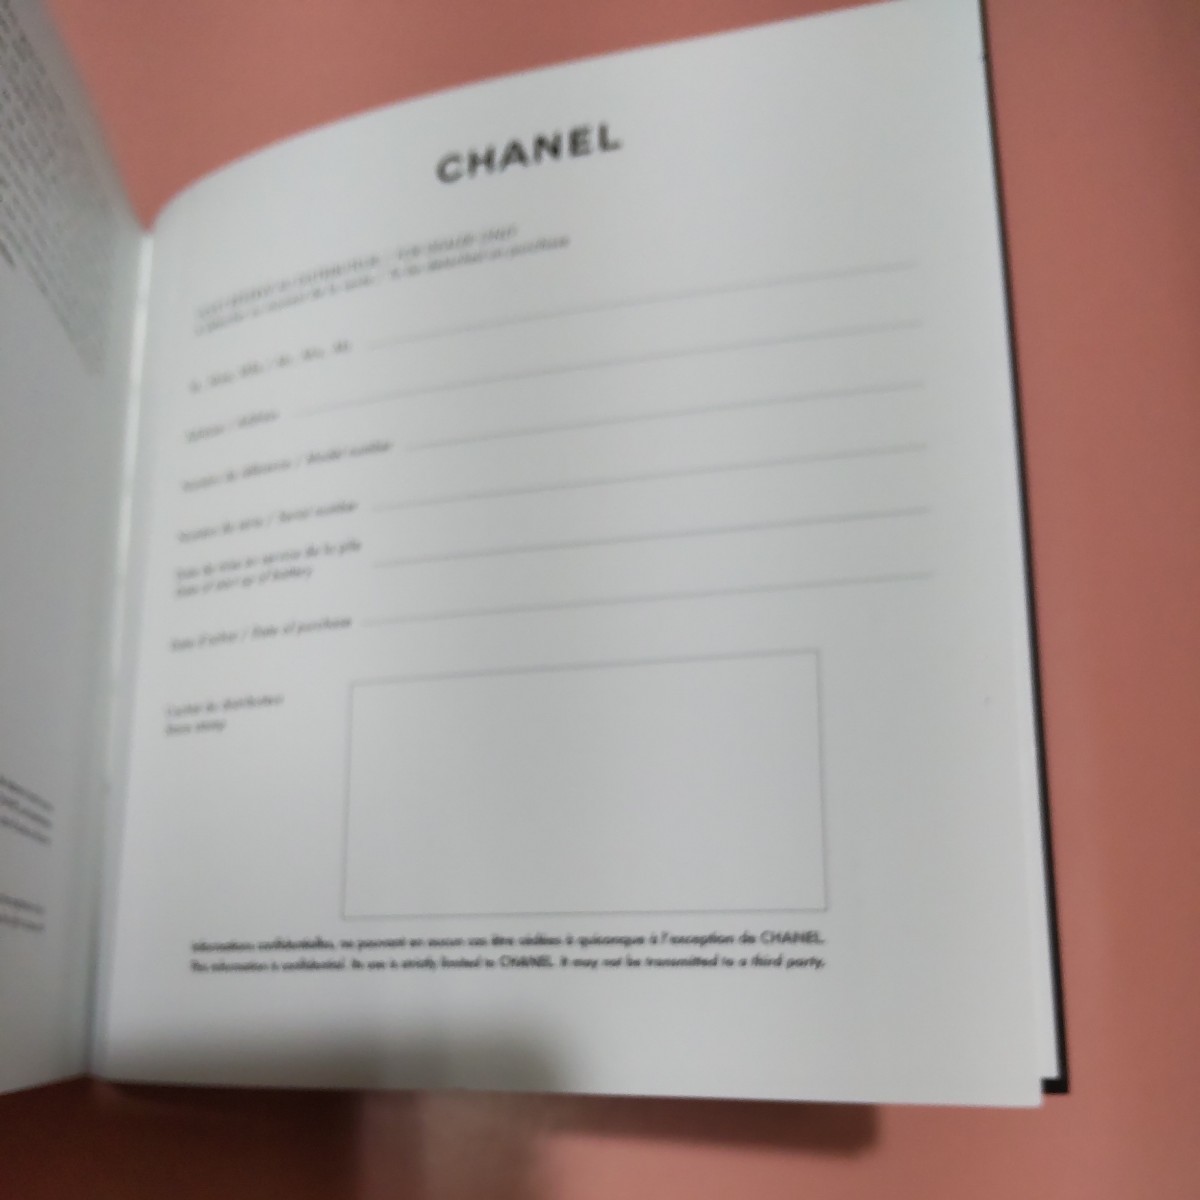 CHANEL regular Chanel original booklet manual owner manual J12 accessory 02